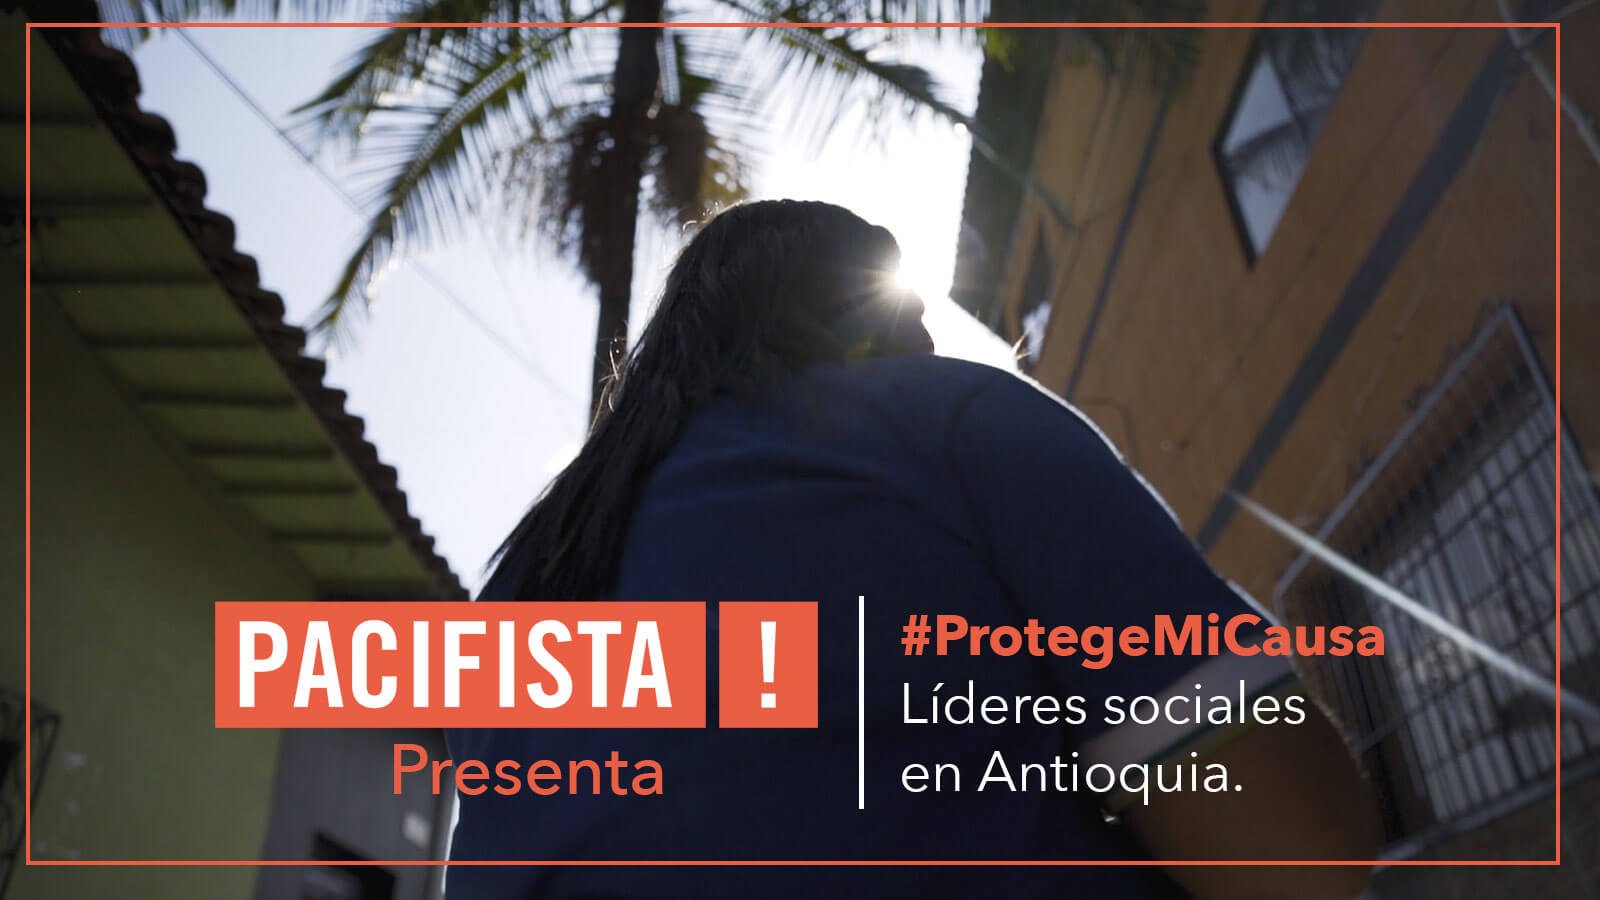 ¡Pacifista! Presenta: #ProtegeMiCausa Líderes sociales en Antioquía